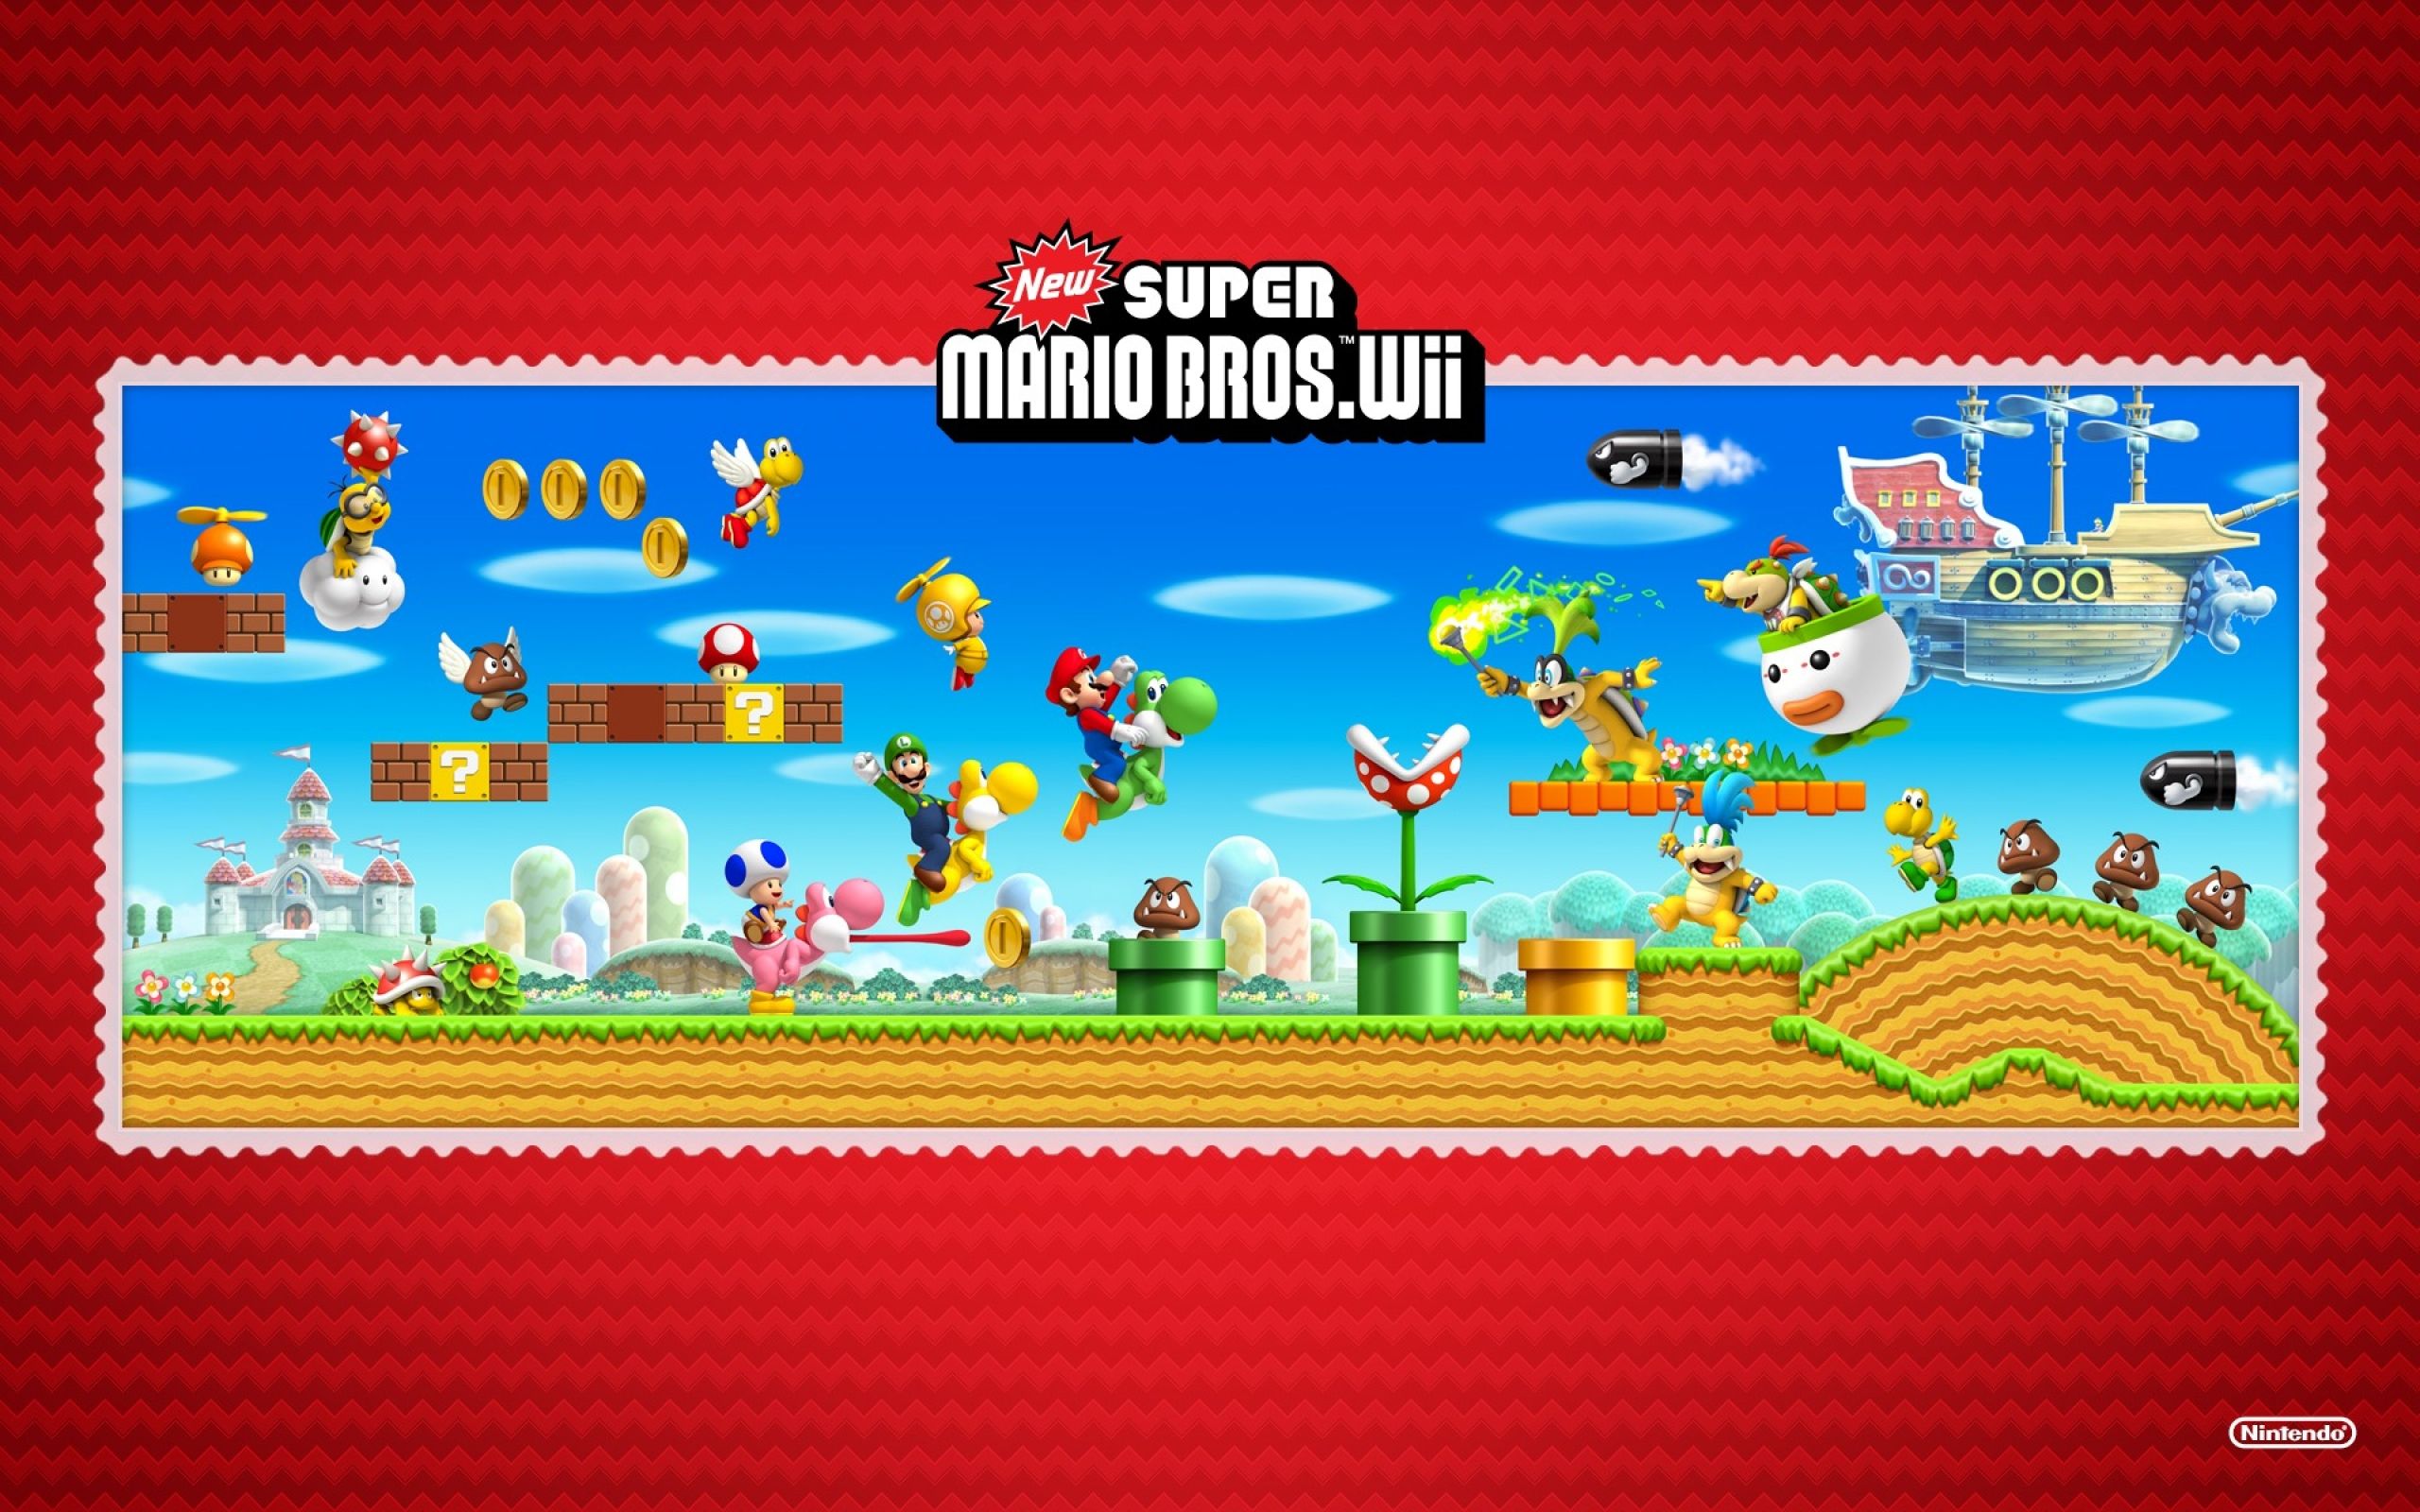 New Super Mario Bros. WII wallpapers | New Super Mario Bros. WII ...